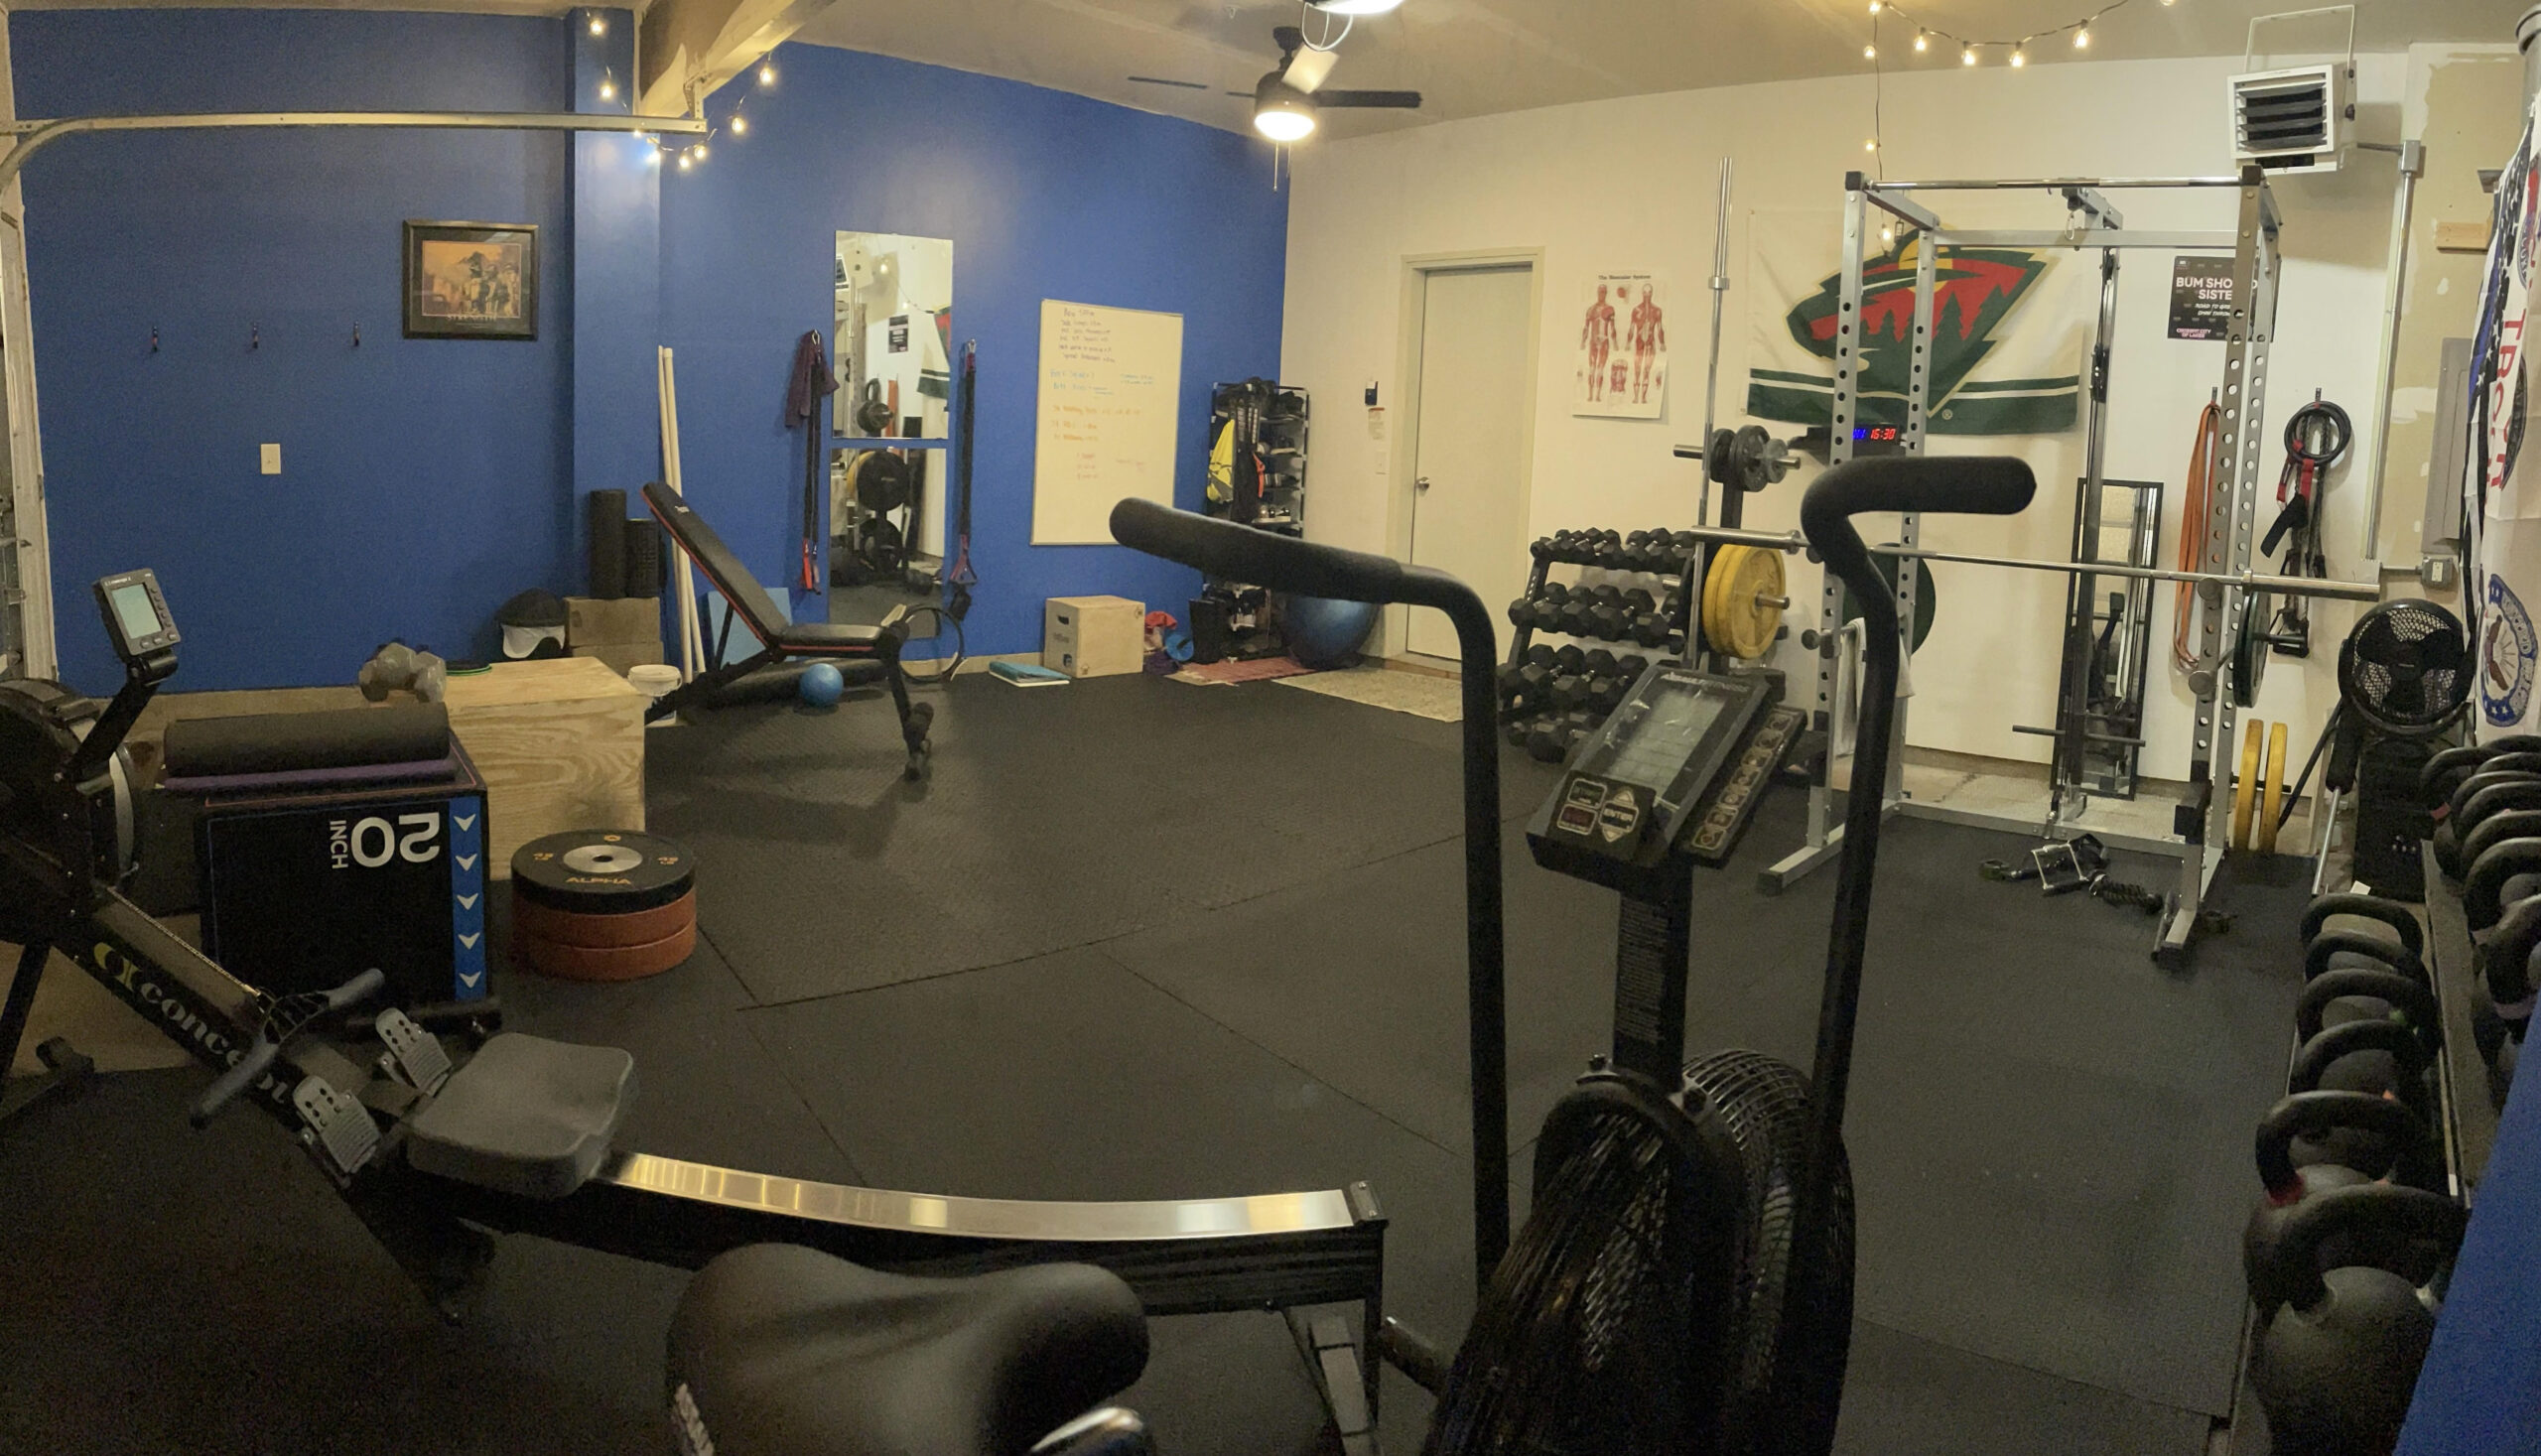 BK's personal trainer studio